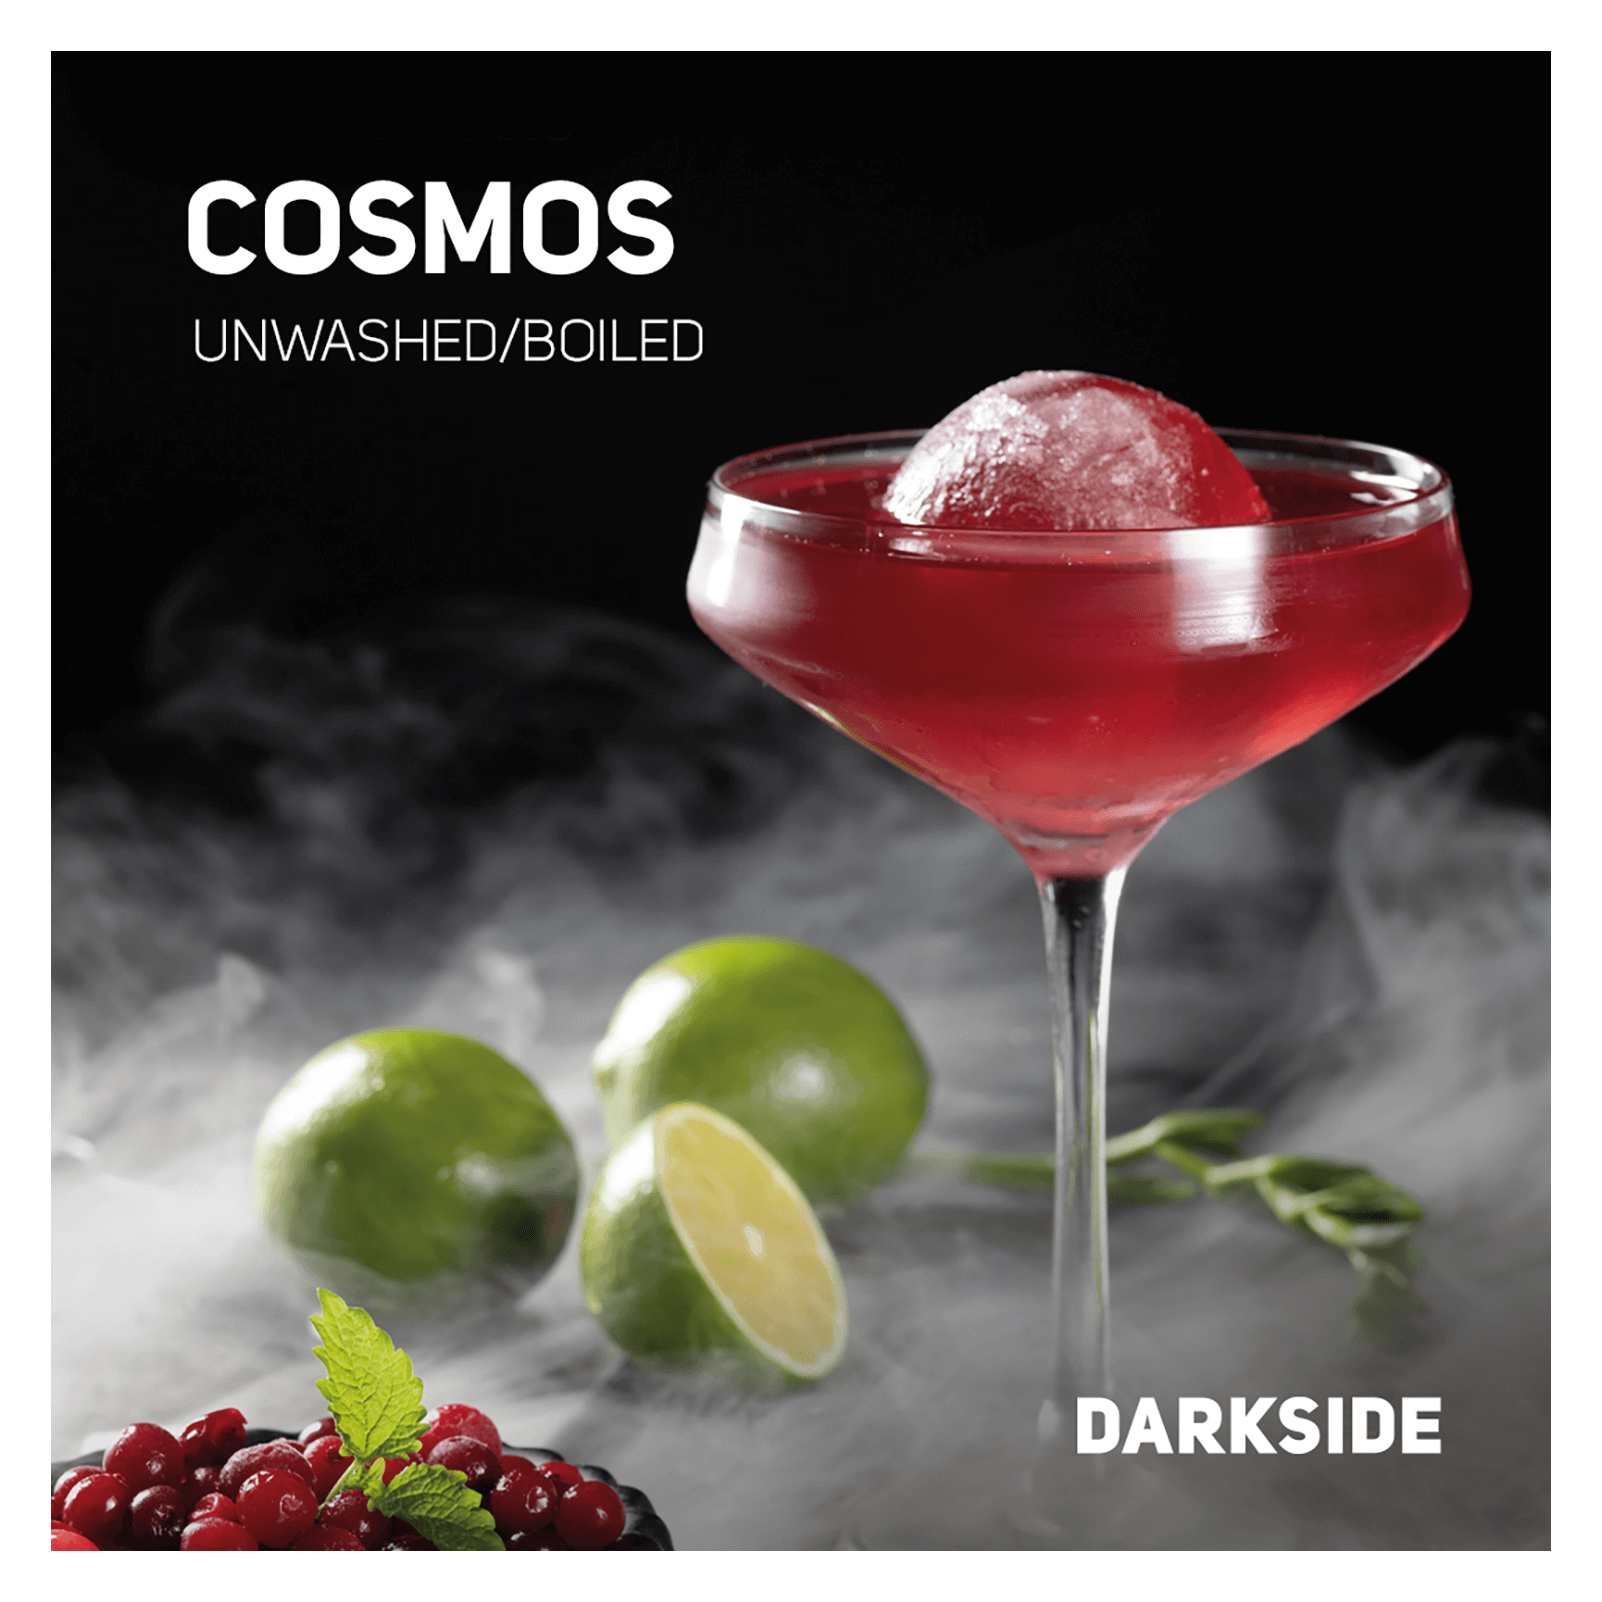 Darkside Base 25g - Cosmos